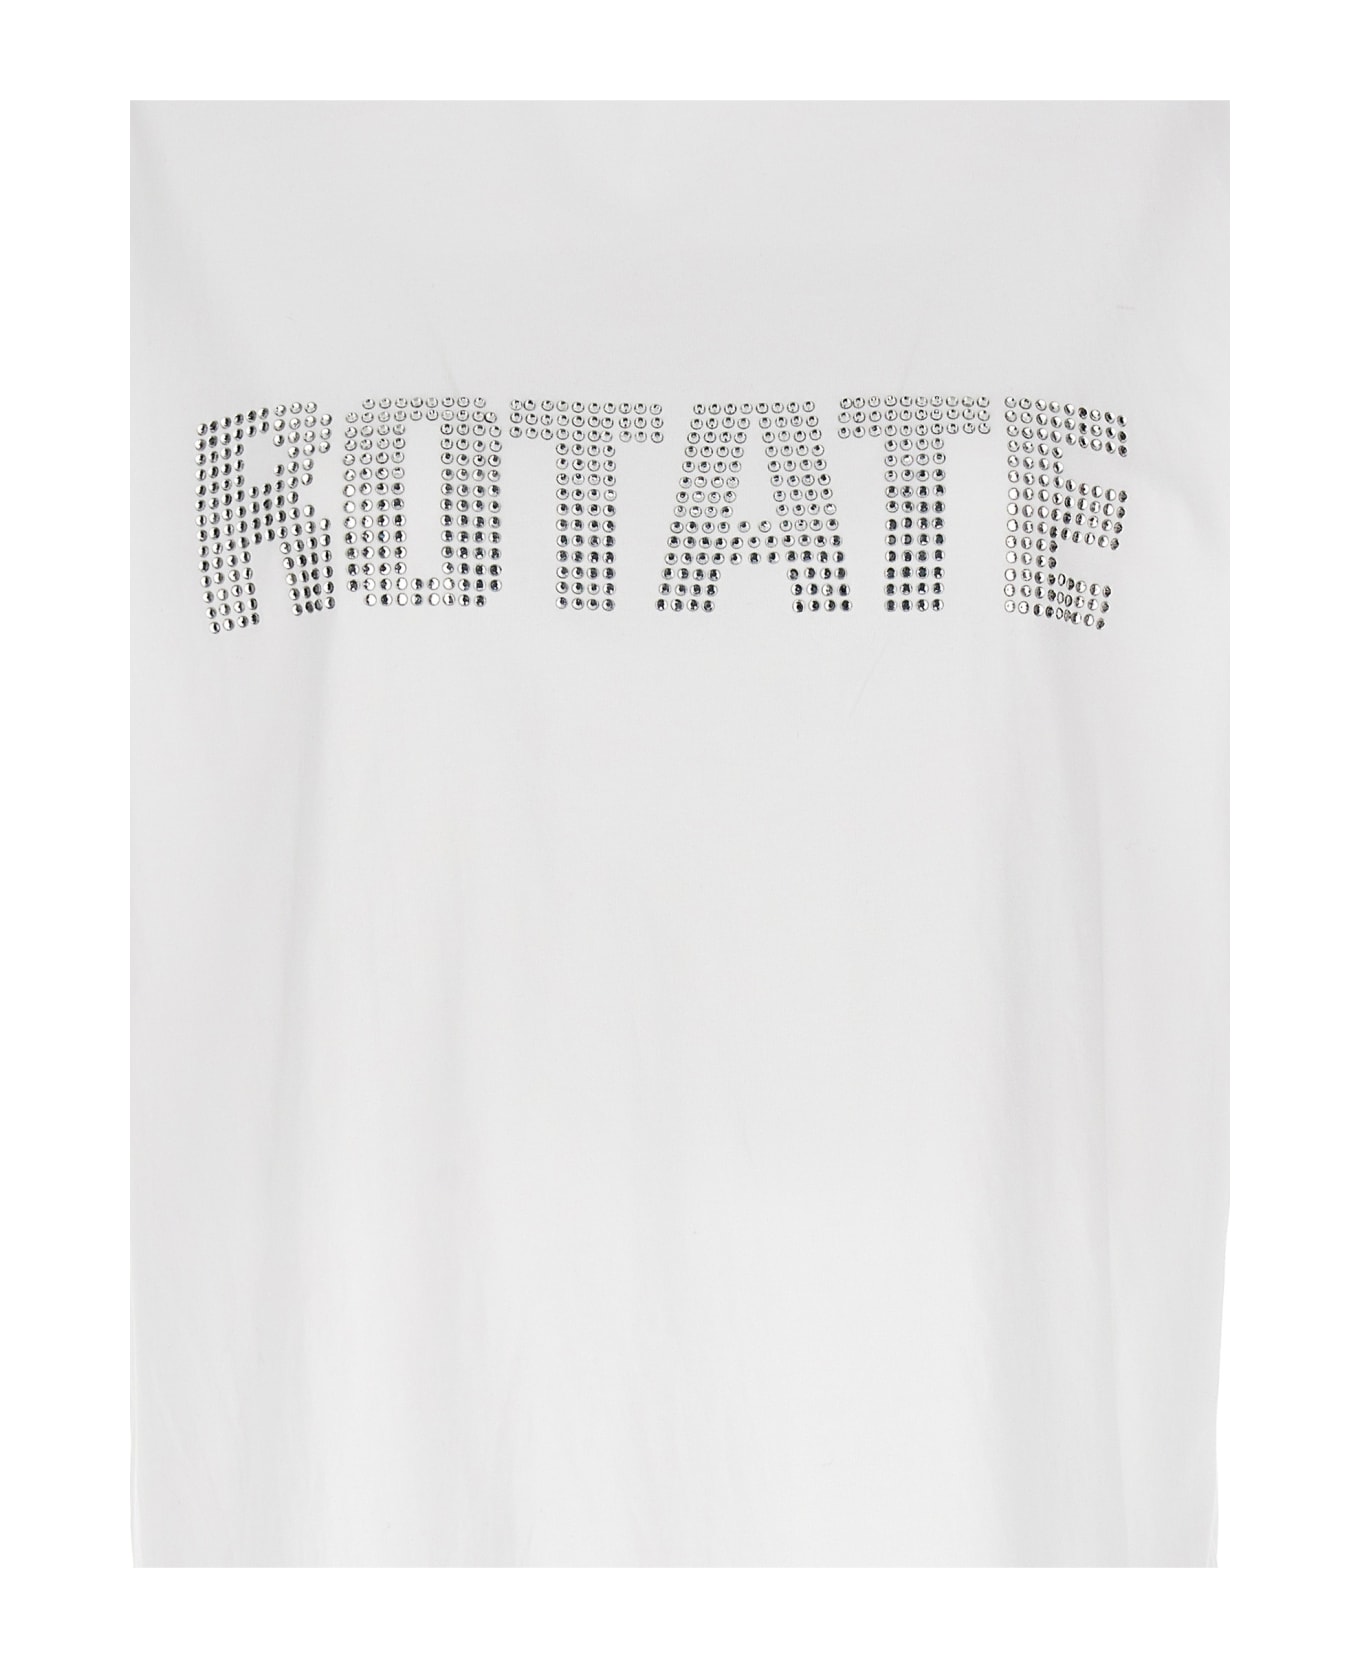 Rotate by Birger Christensen Sunday Capsule Logo T-shirt - White